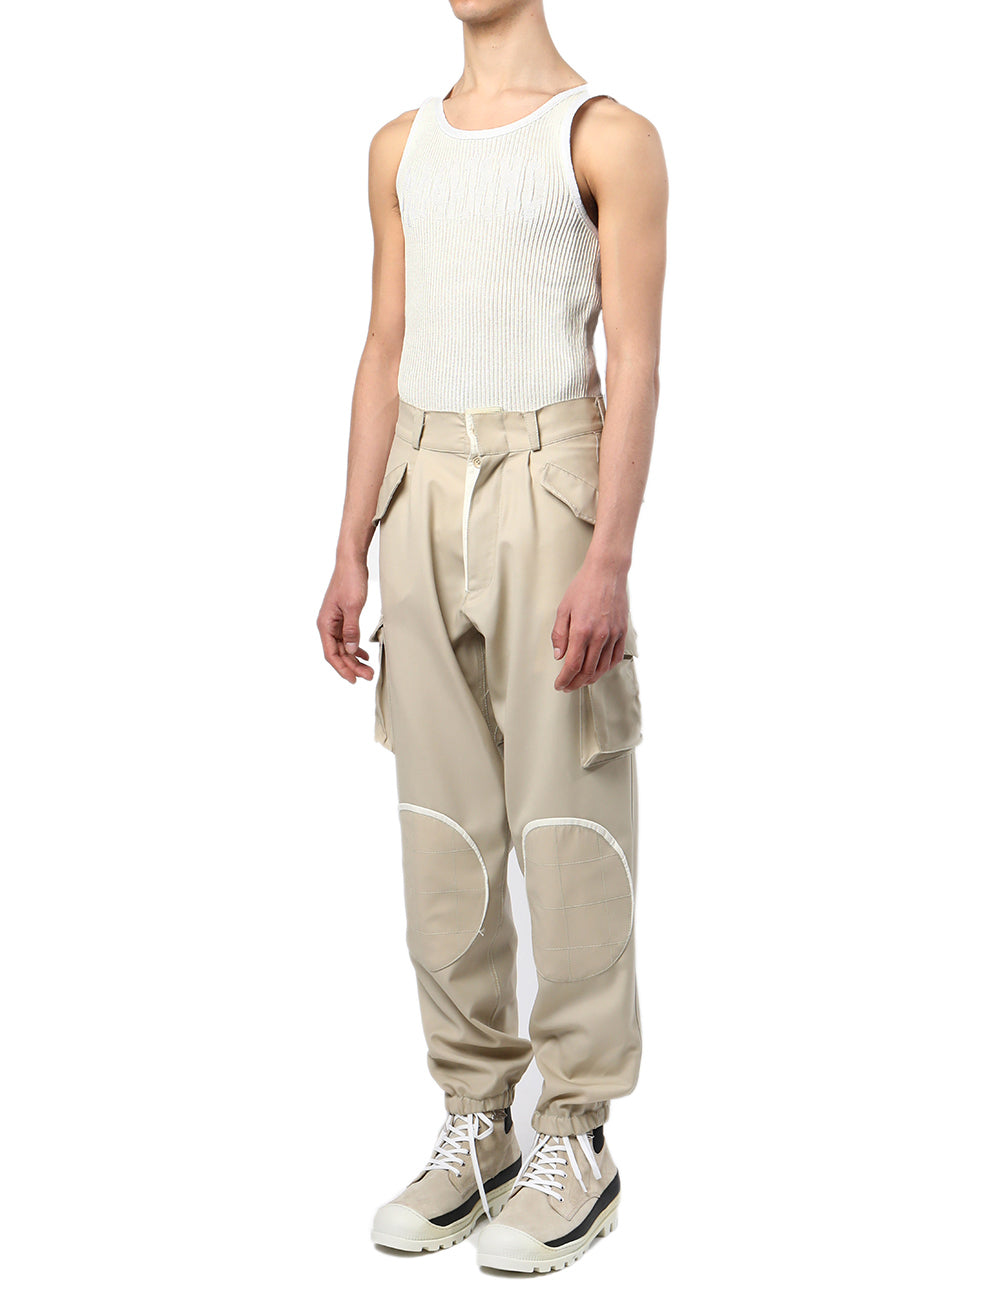 Magliano Wool Multi Pocket Pants